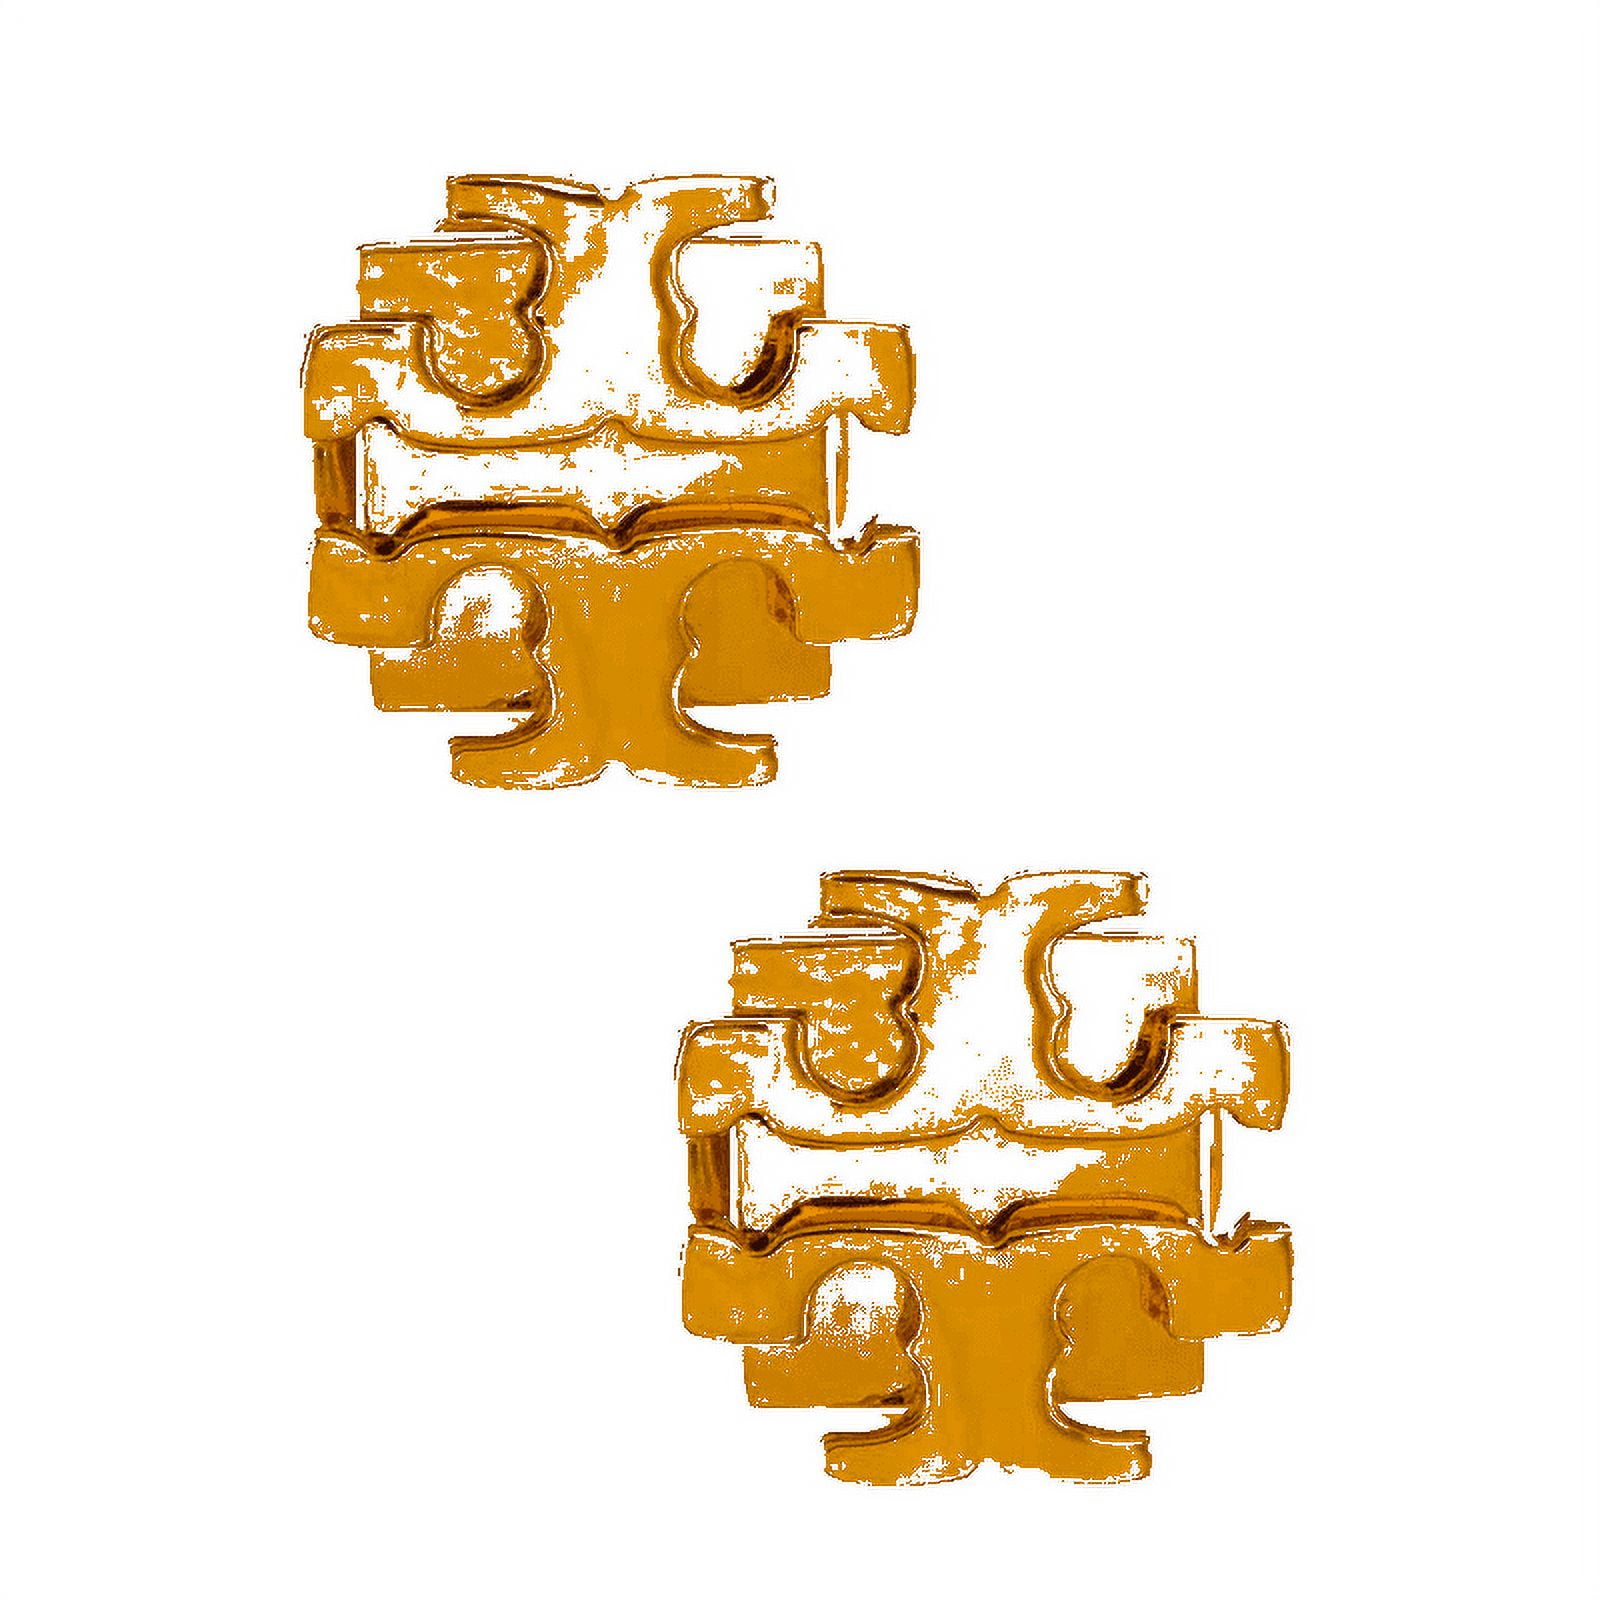 Earrings Tory Burch Gold in Metal - 32061498